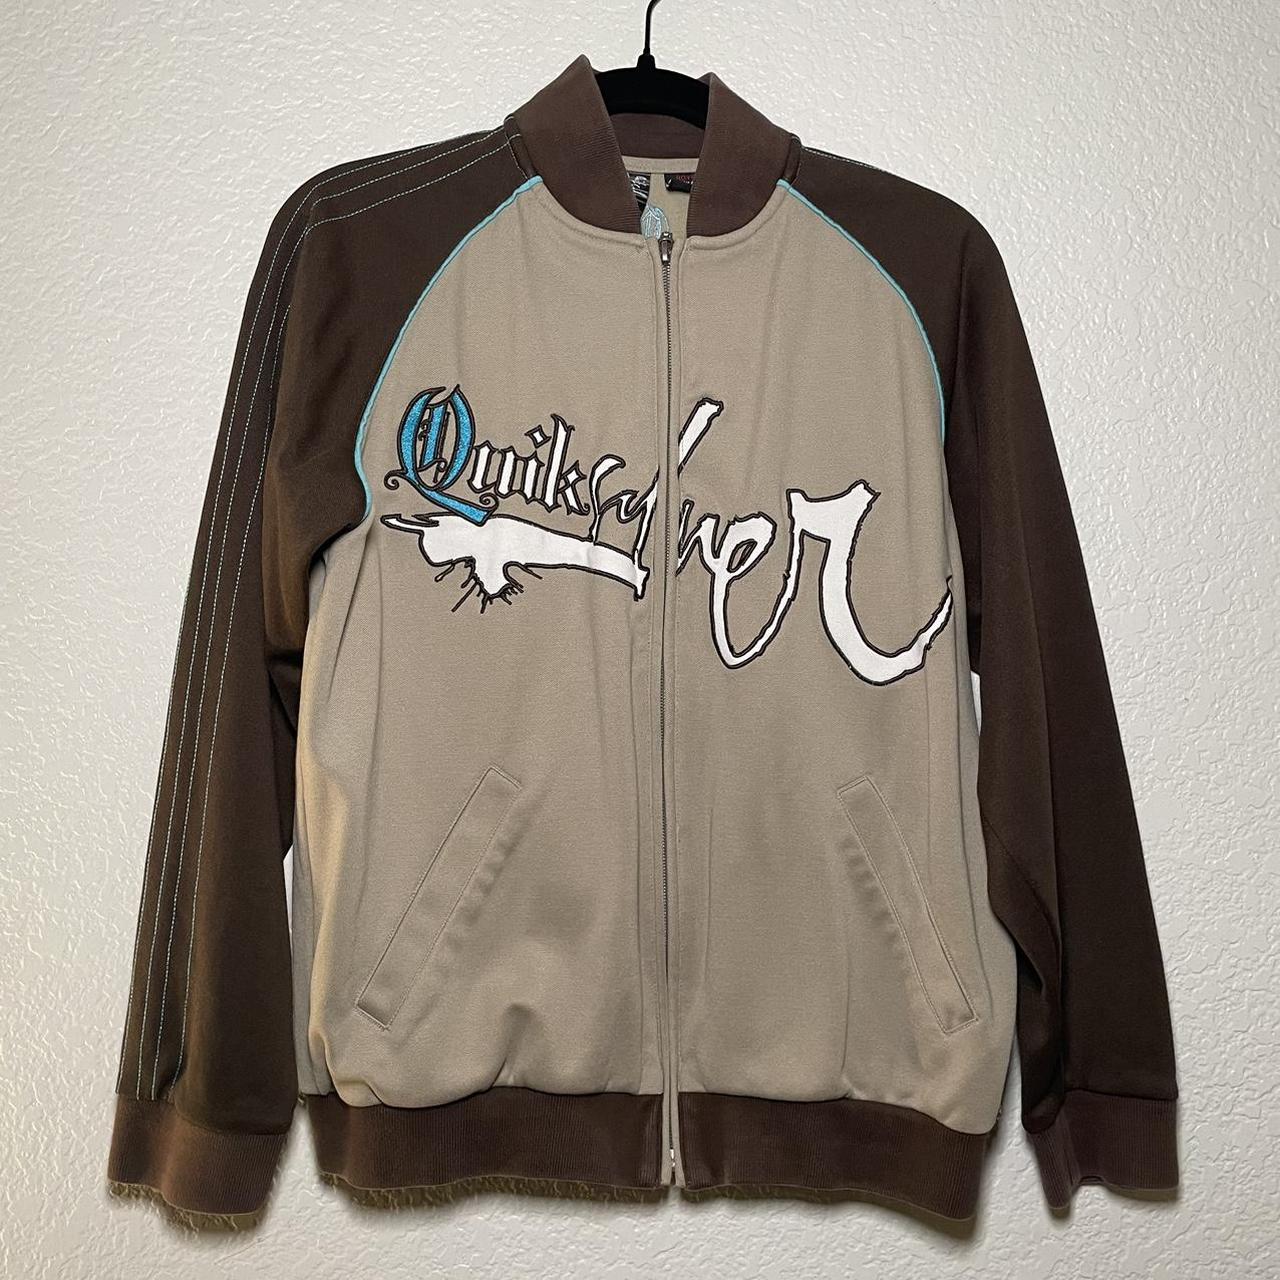 quicksilver brown and beige jacket - originally a... - Depop